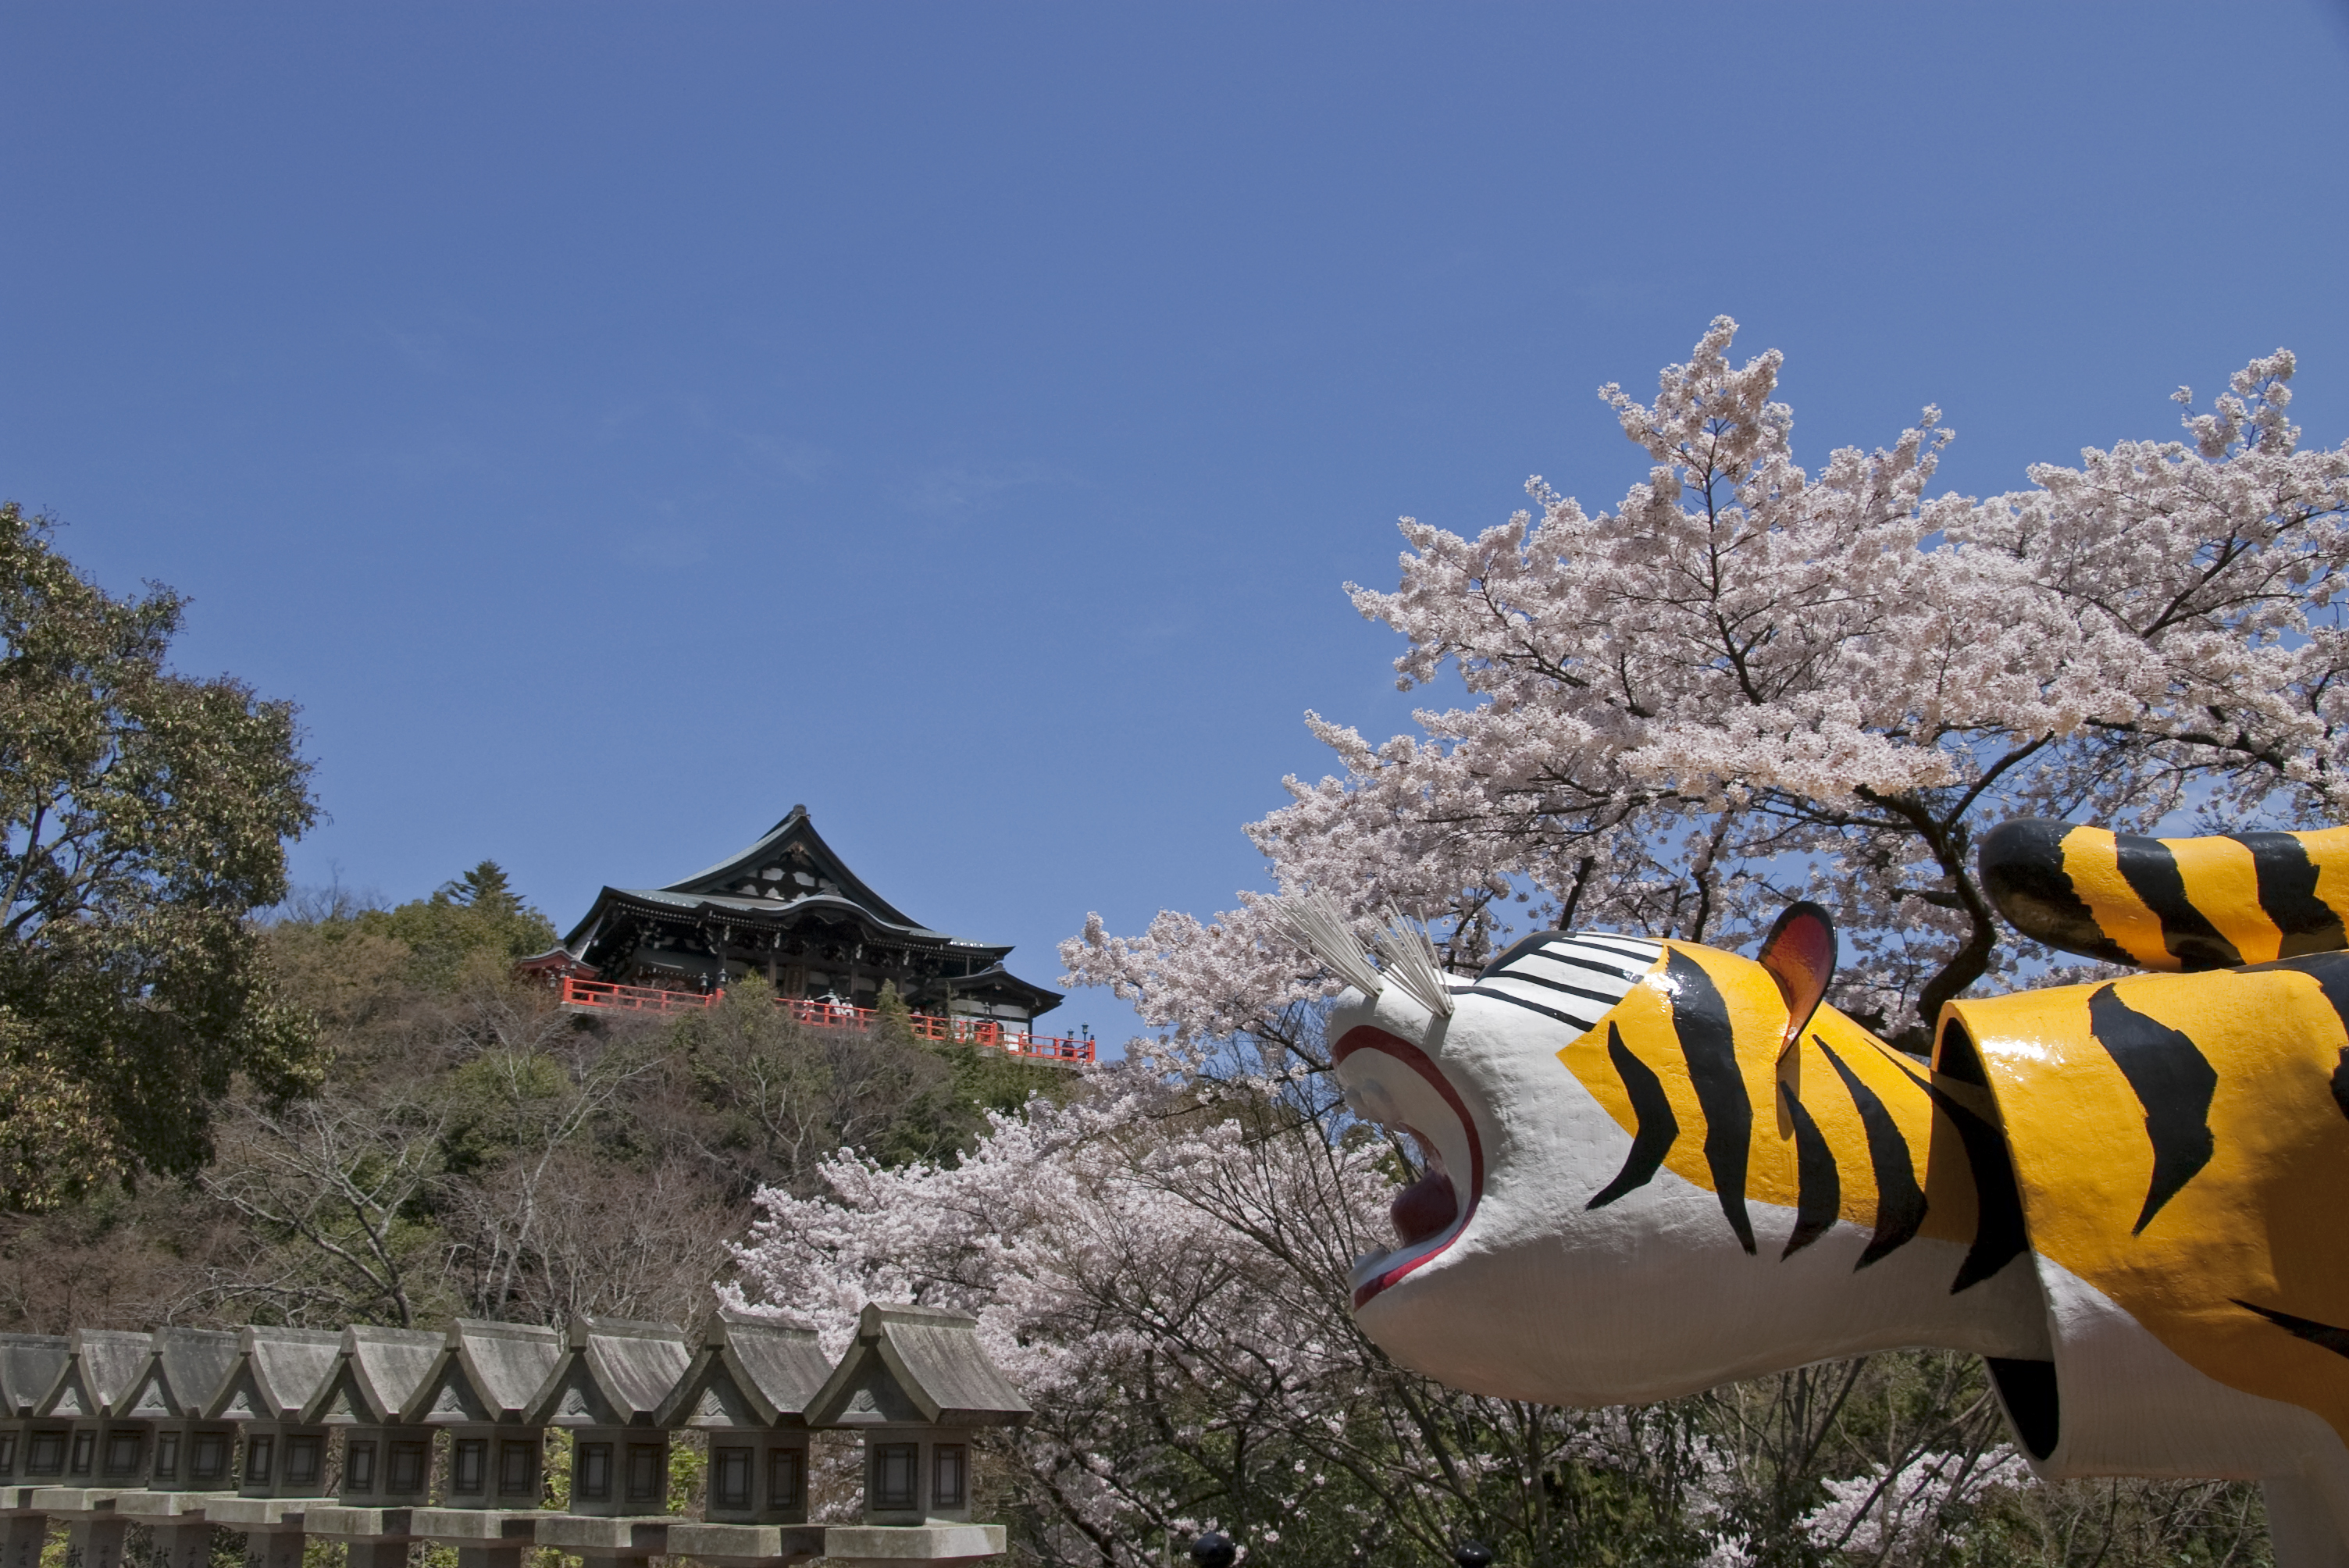 信貴山朝護孫子寺の桜の写真